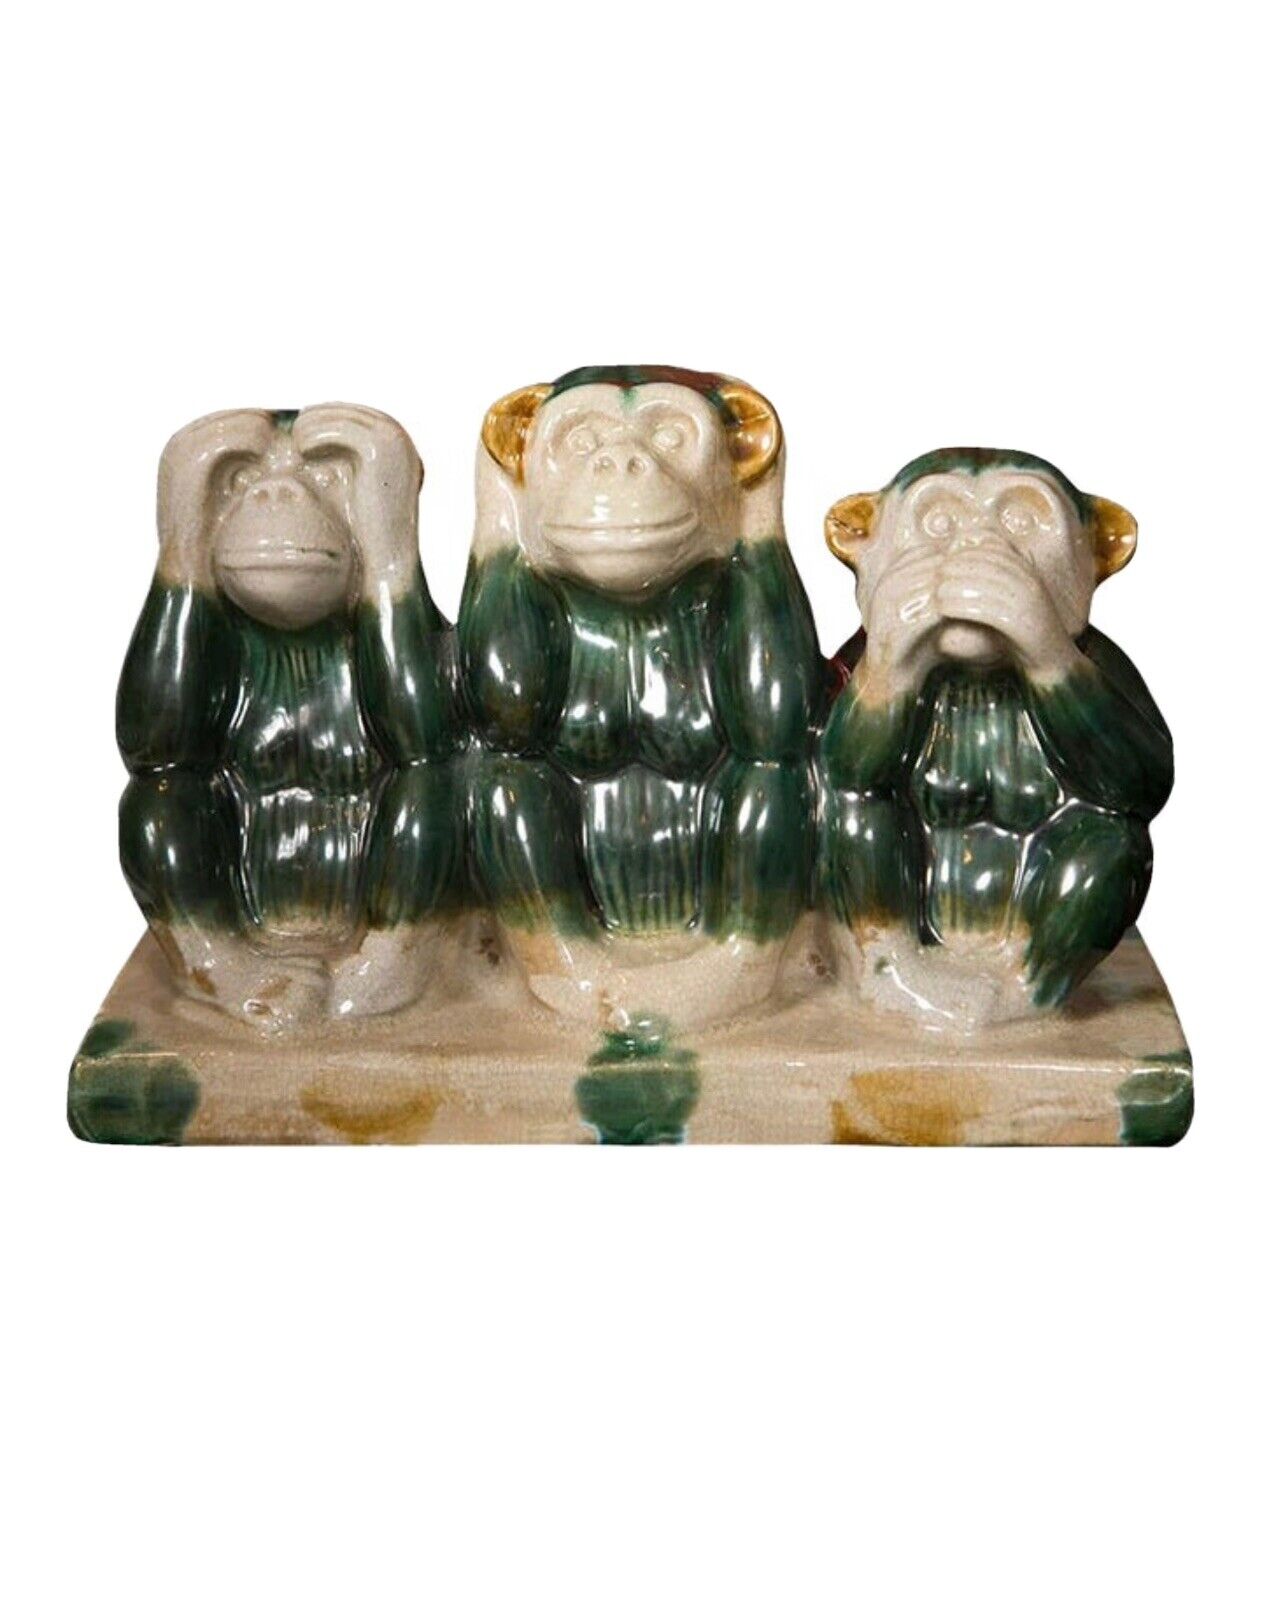 Ceramic Vintage Monkeys ‘Hear, Speak, See No Evil’ Collectible Rare Find